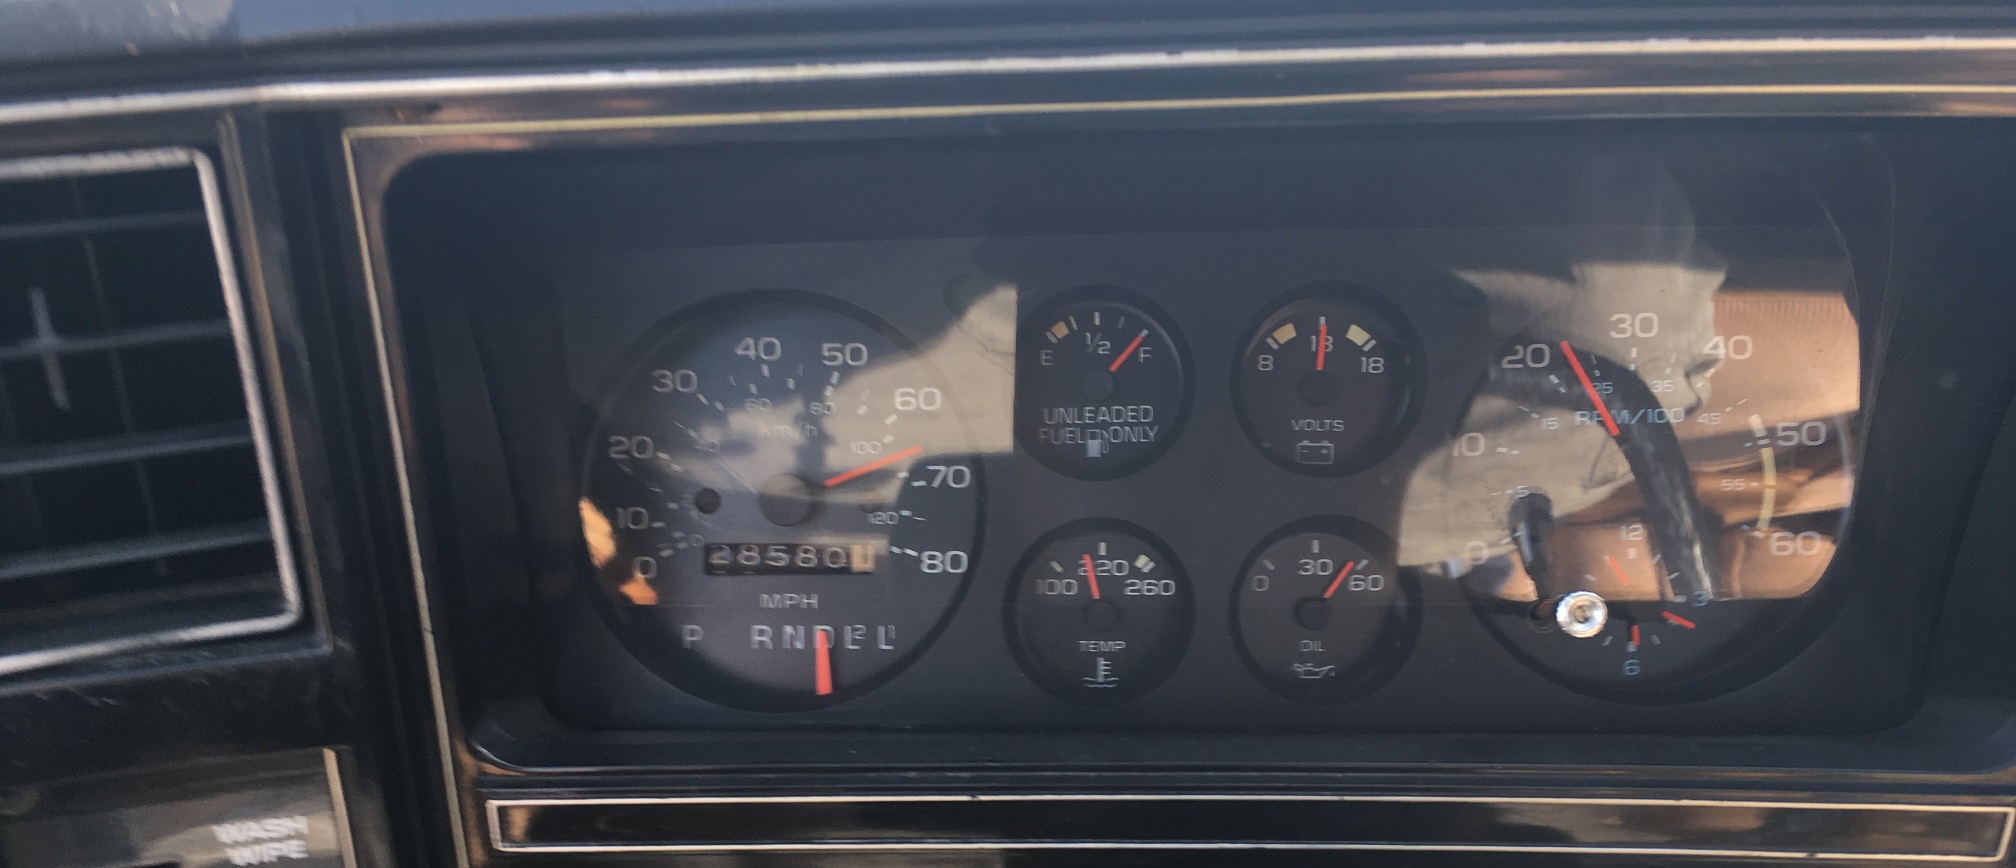 1978 Chevrolet El Camino gauge cluster